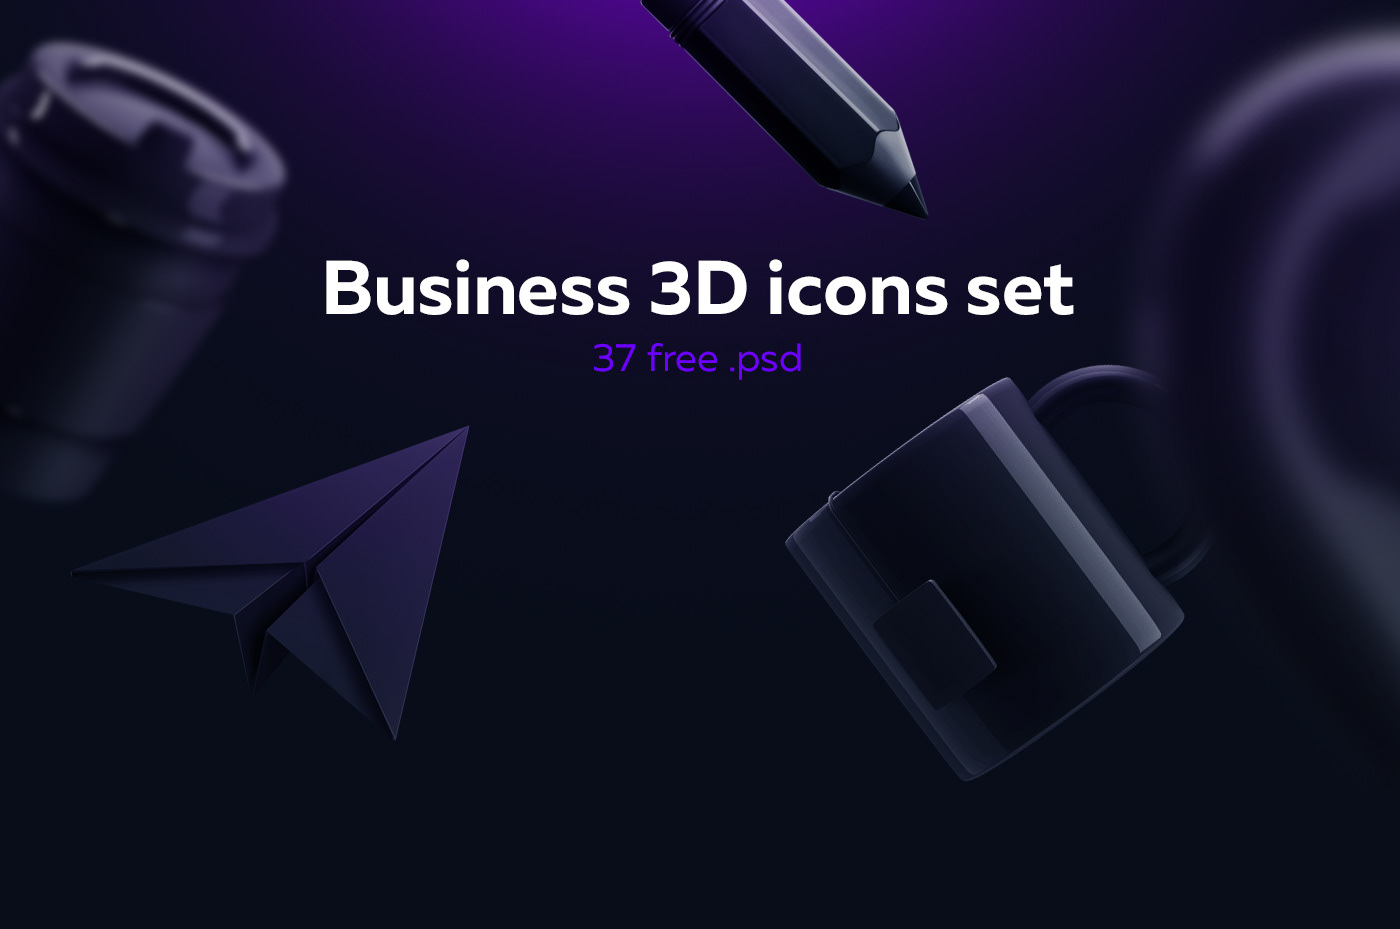 3D business edit free icons popular presentation set Web